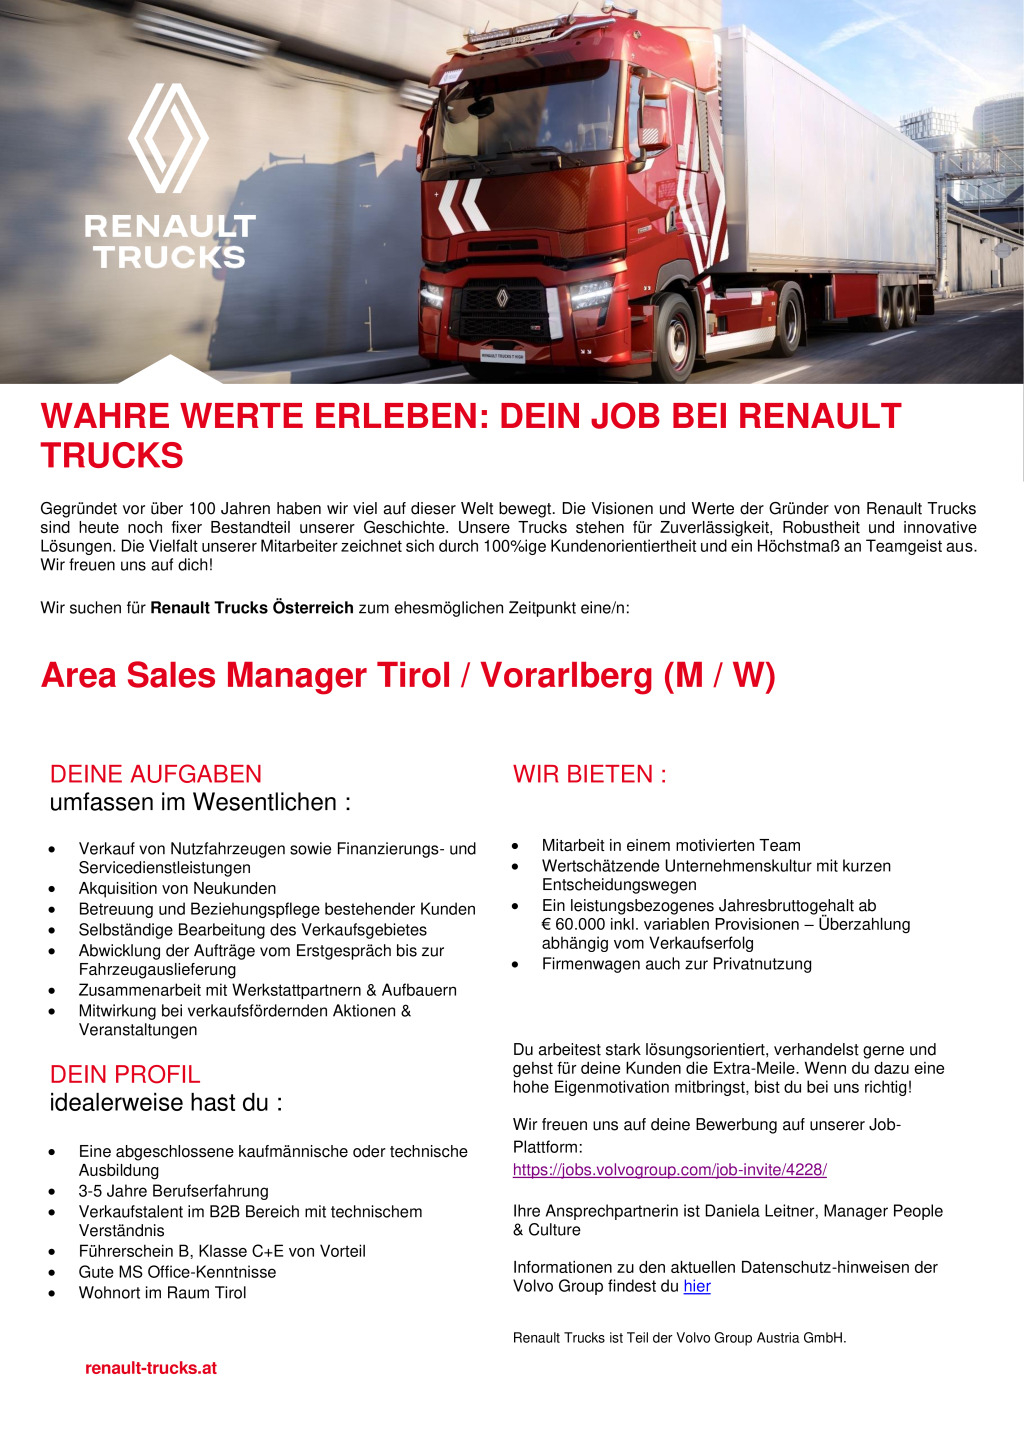 Area Sales Manager Tirol / Vorarlberg